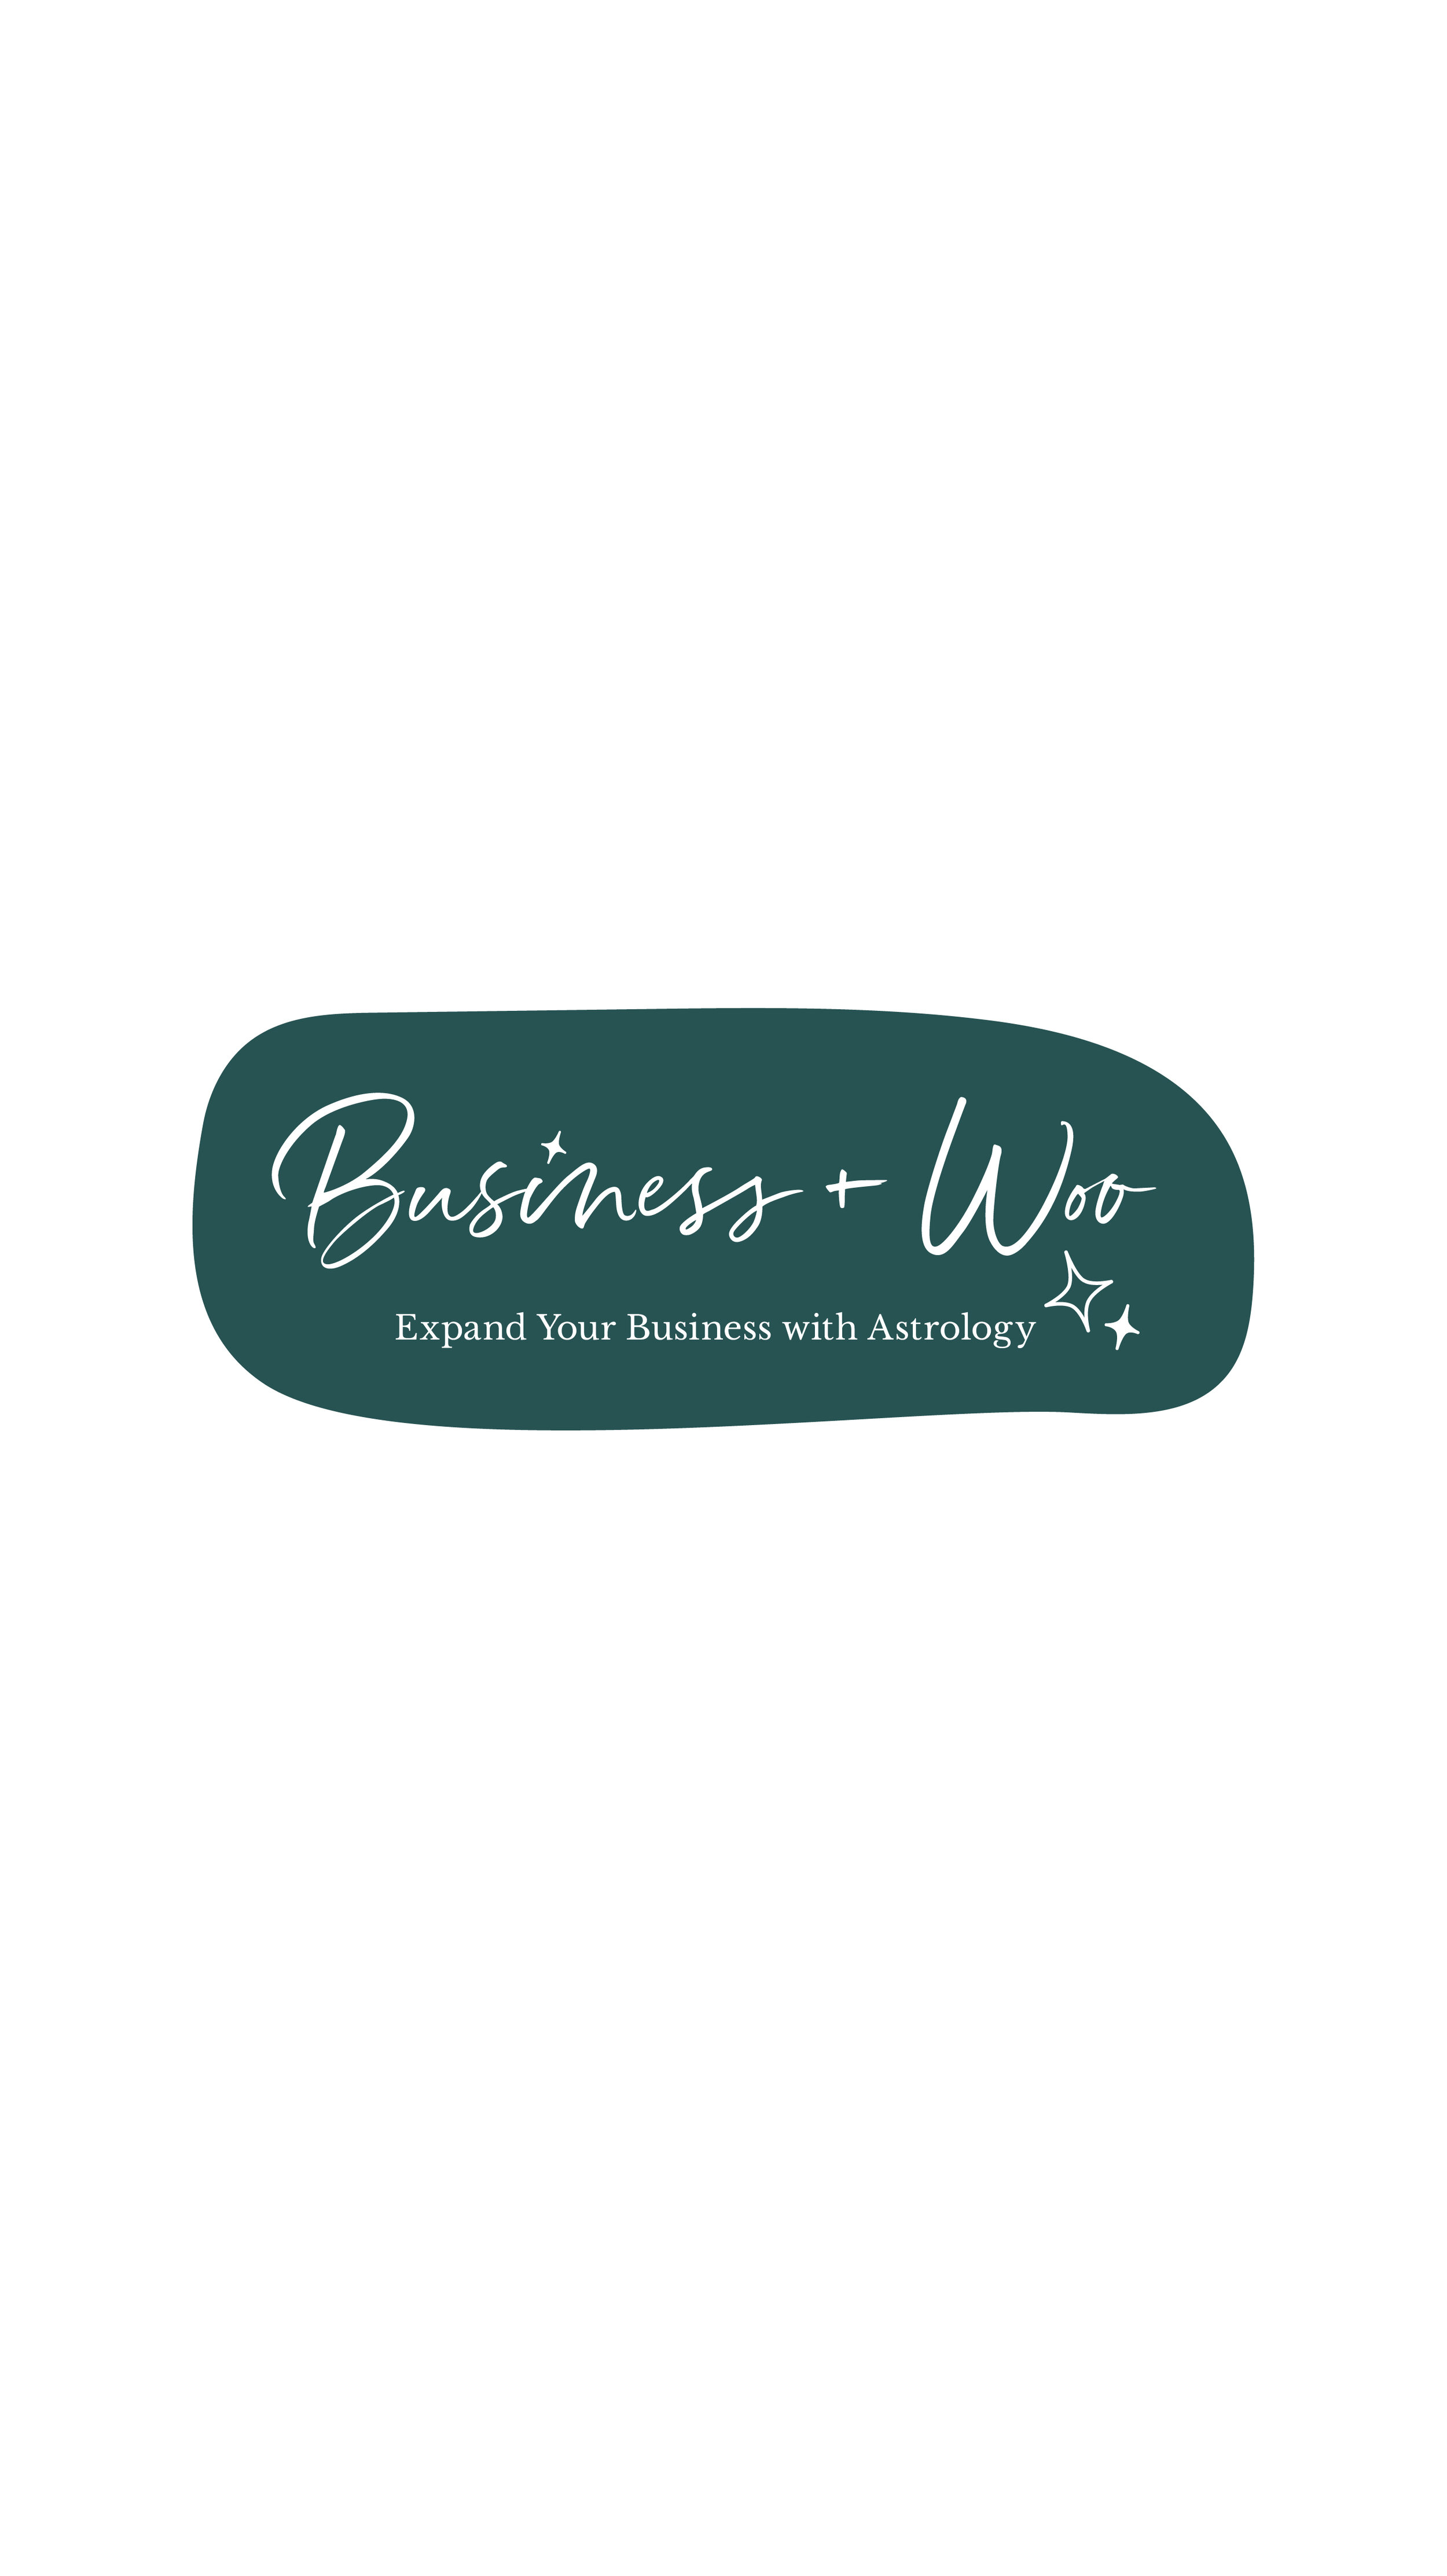 Business + Woo - Marcia Schabel Signature Brand Journey